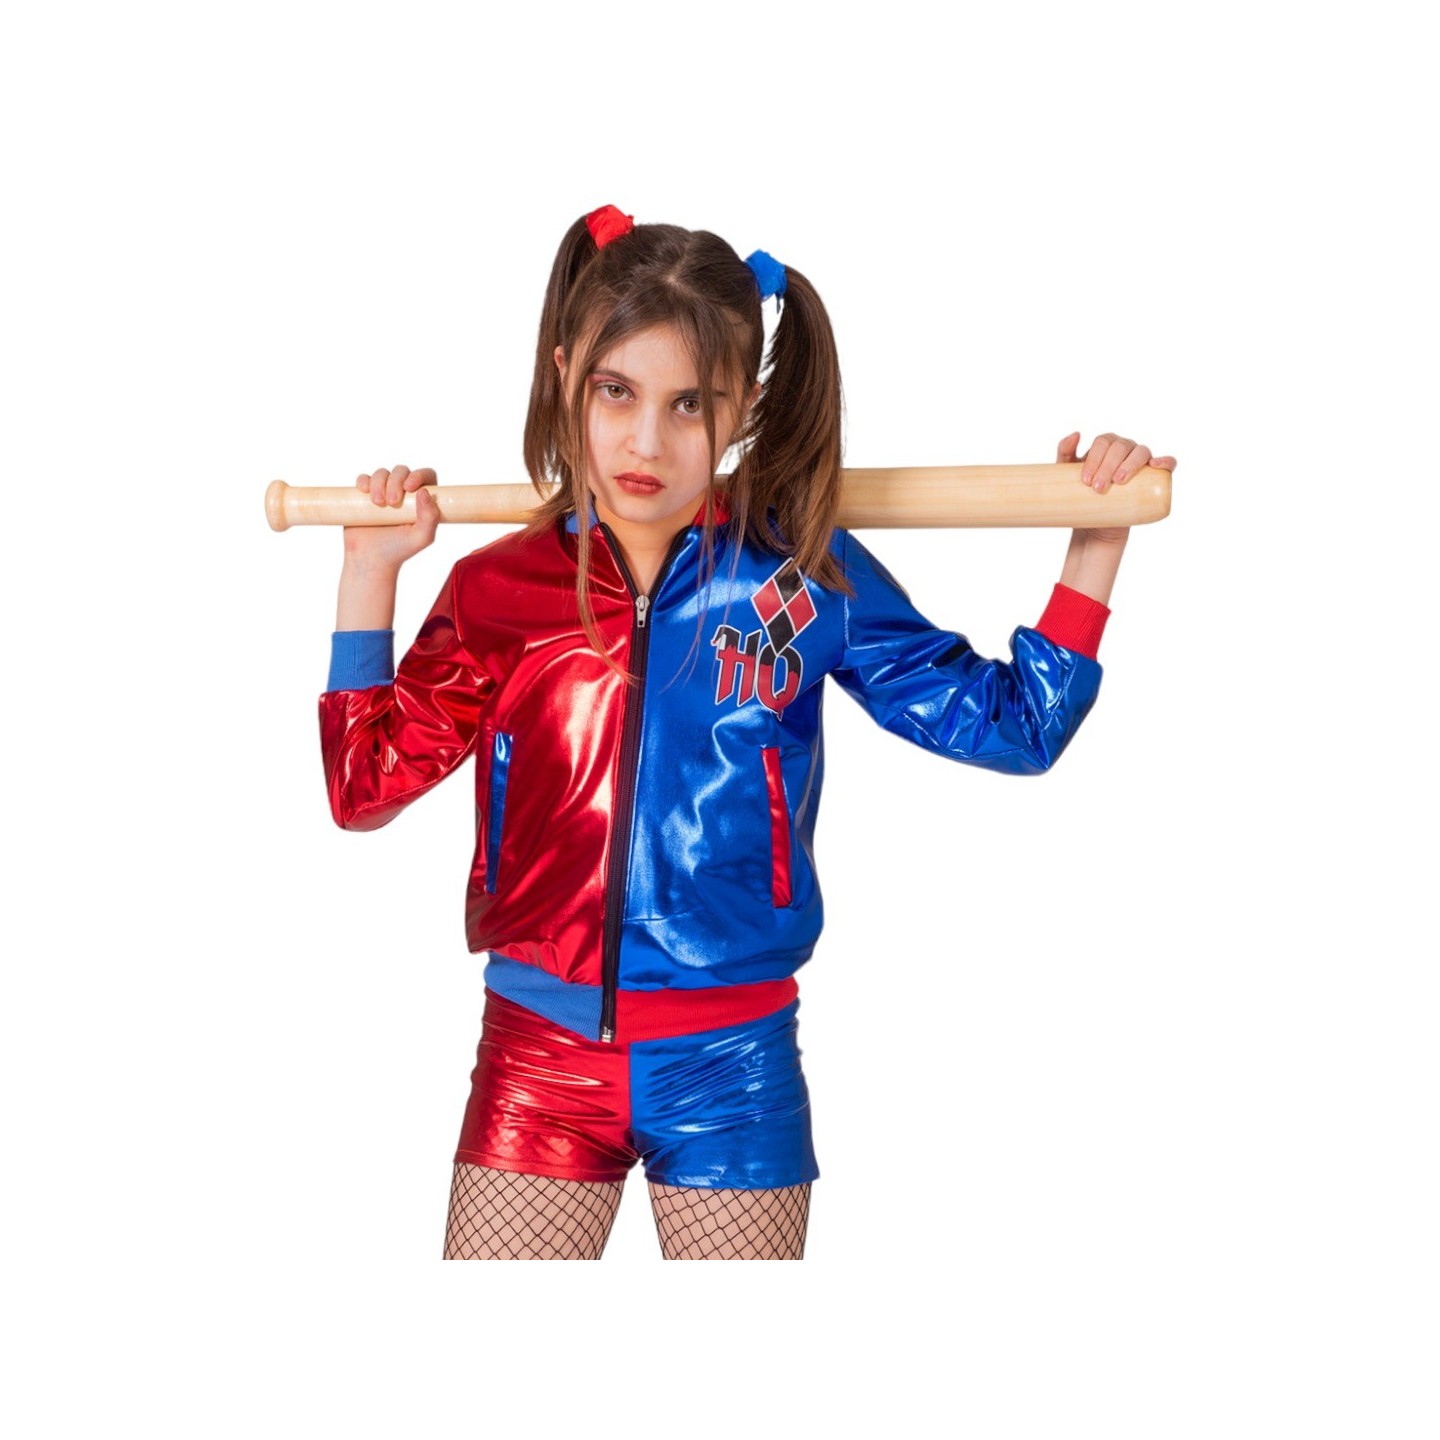 Meisje ik ontbijt gemiddelde Harley Quinn kostuum kind | Jokershop.be - Verkleedkleding